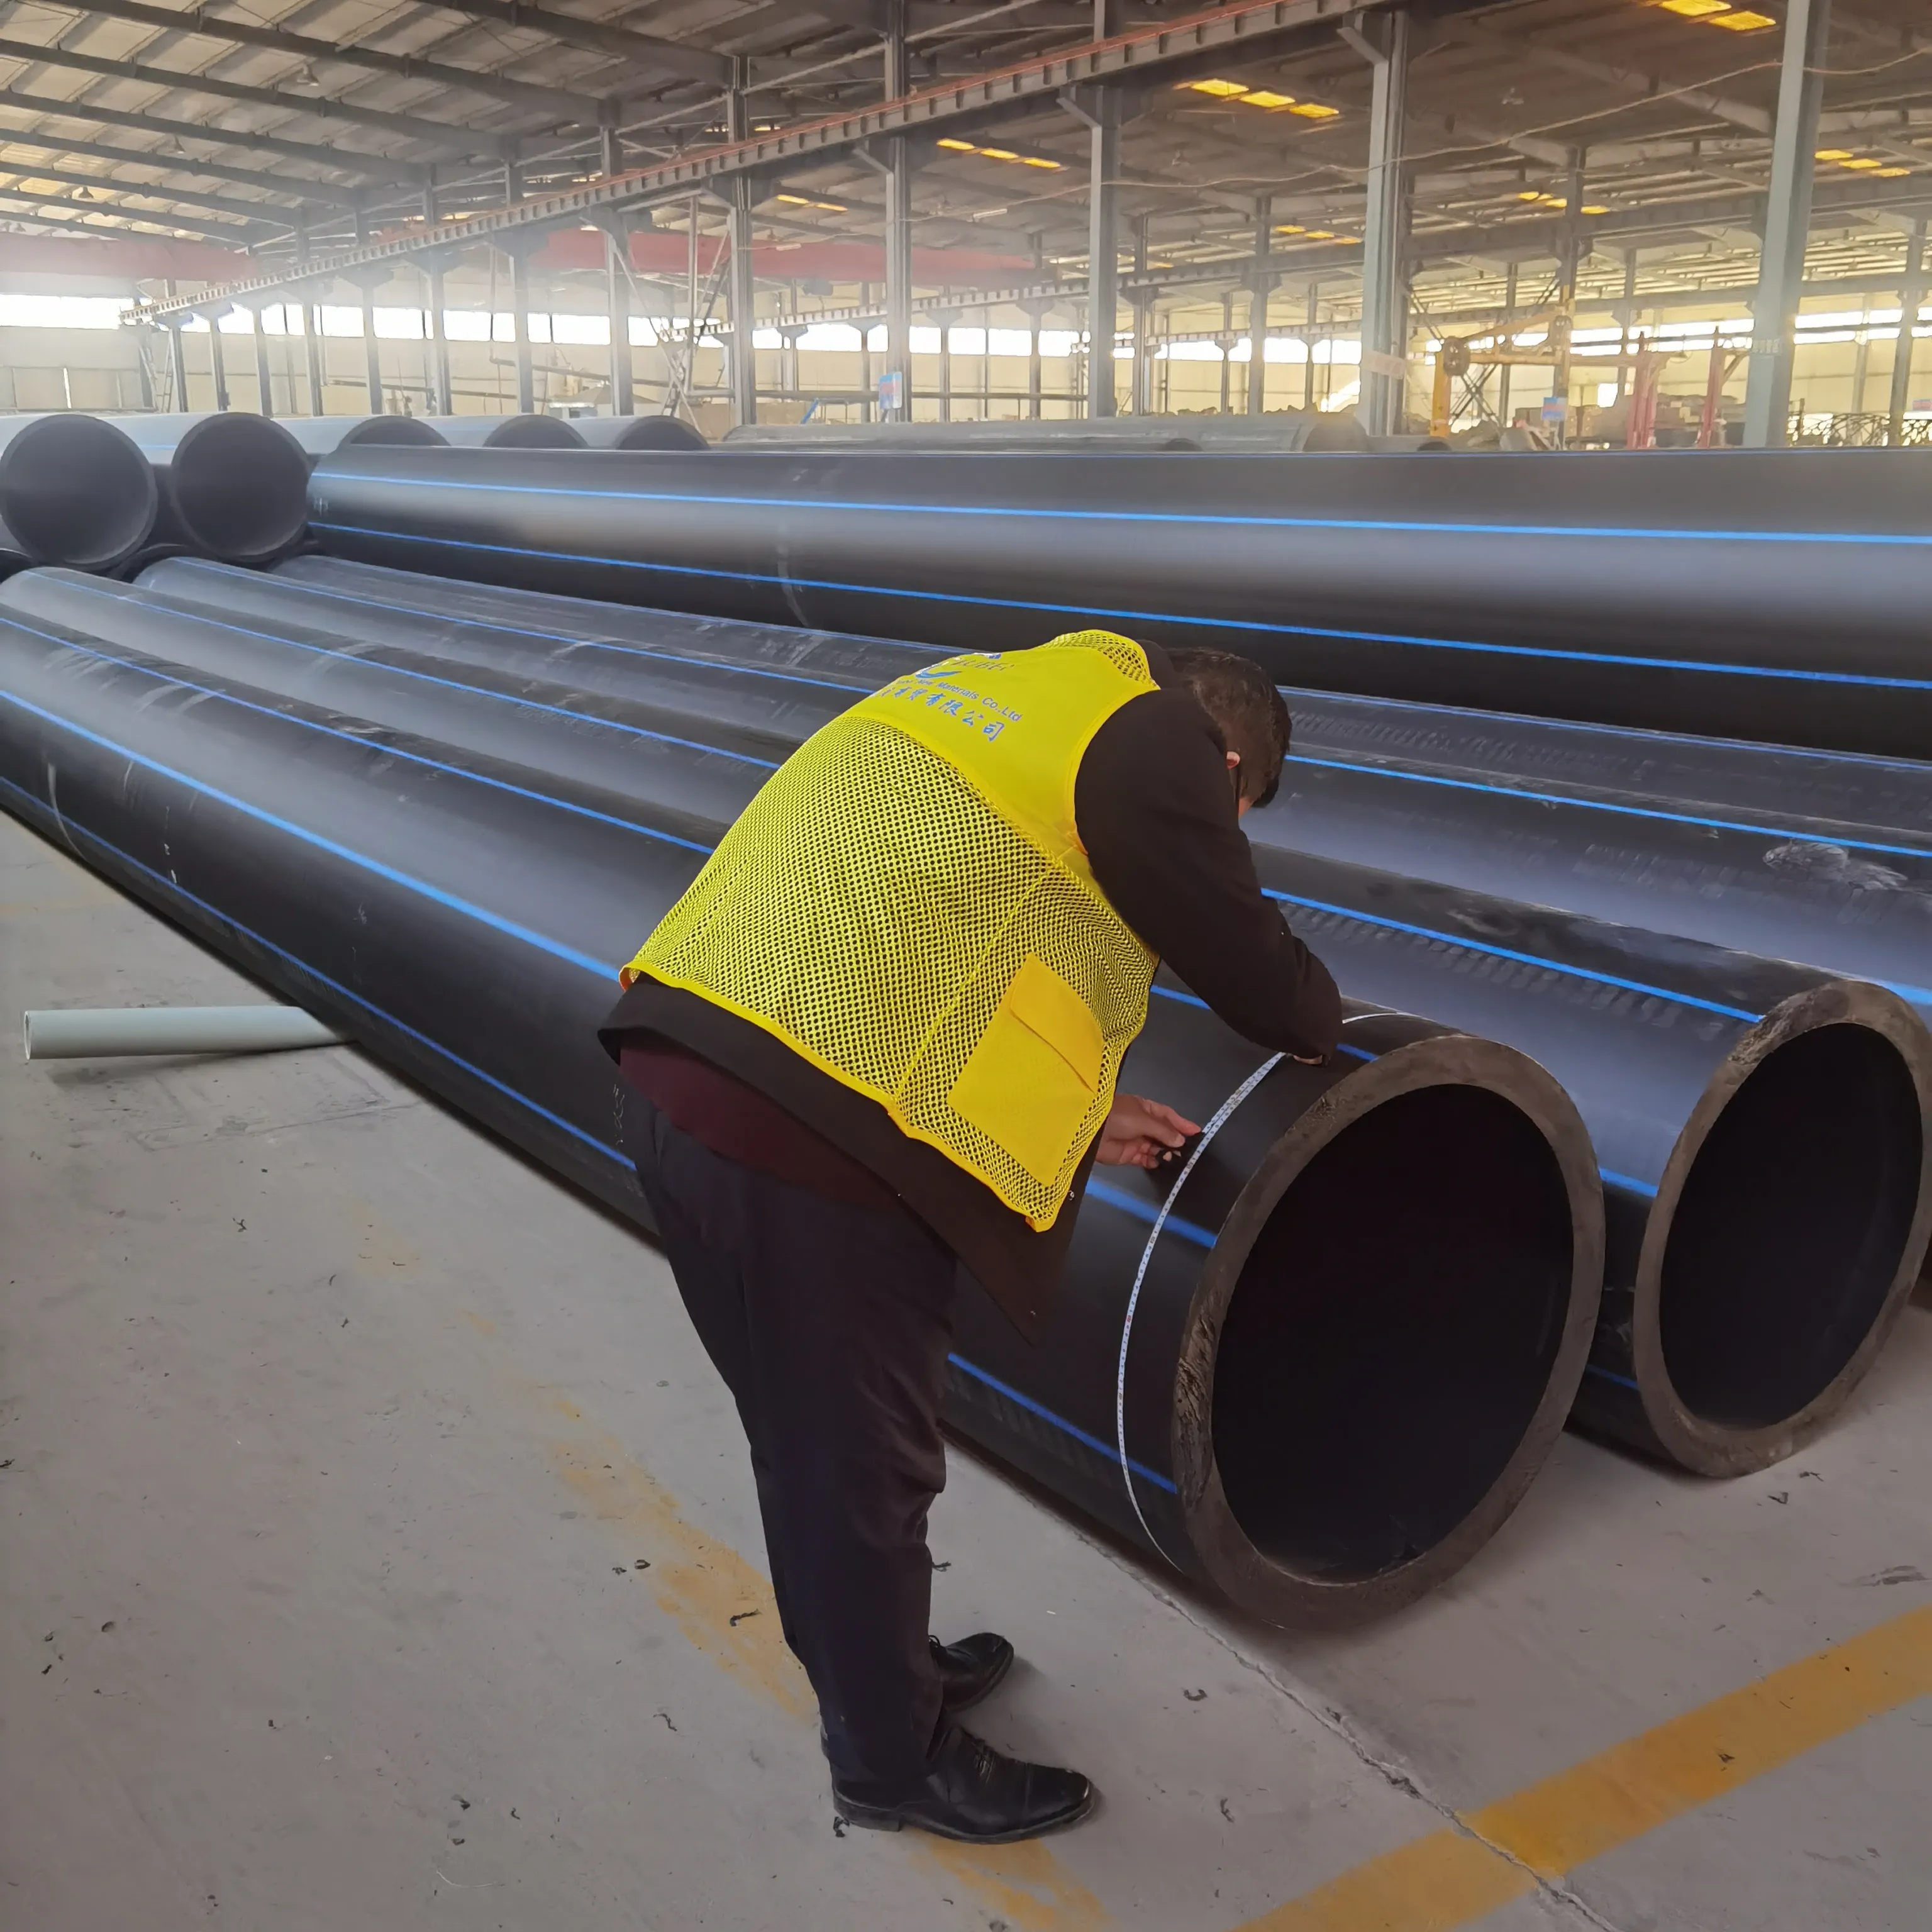 PE 100 high density polyethylene pipe for water supply